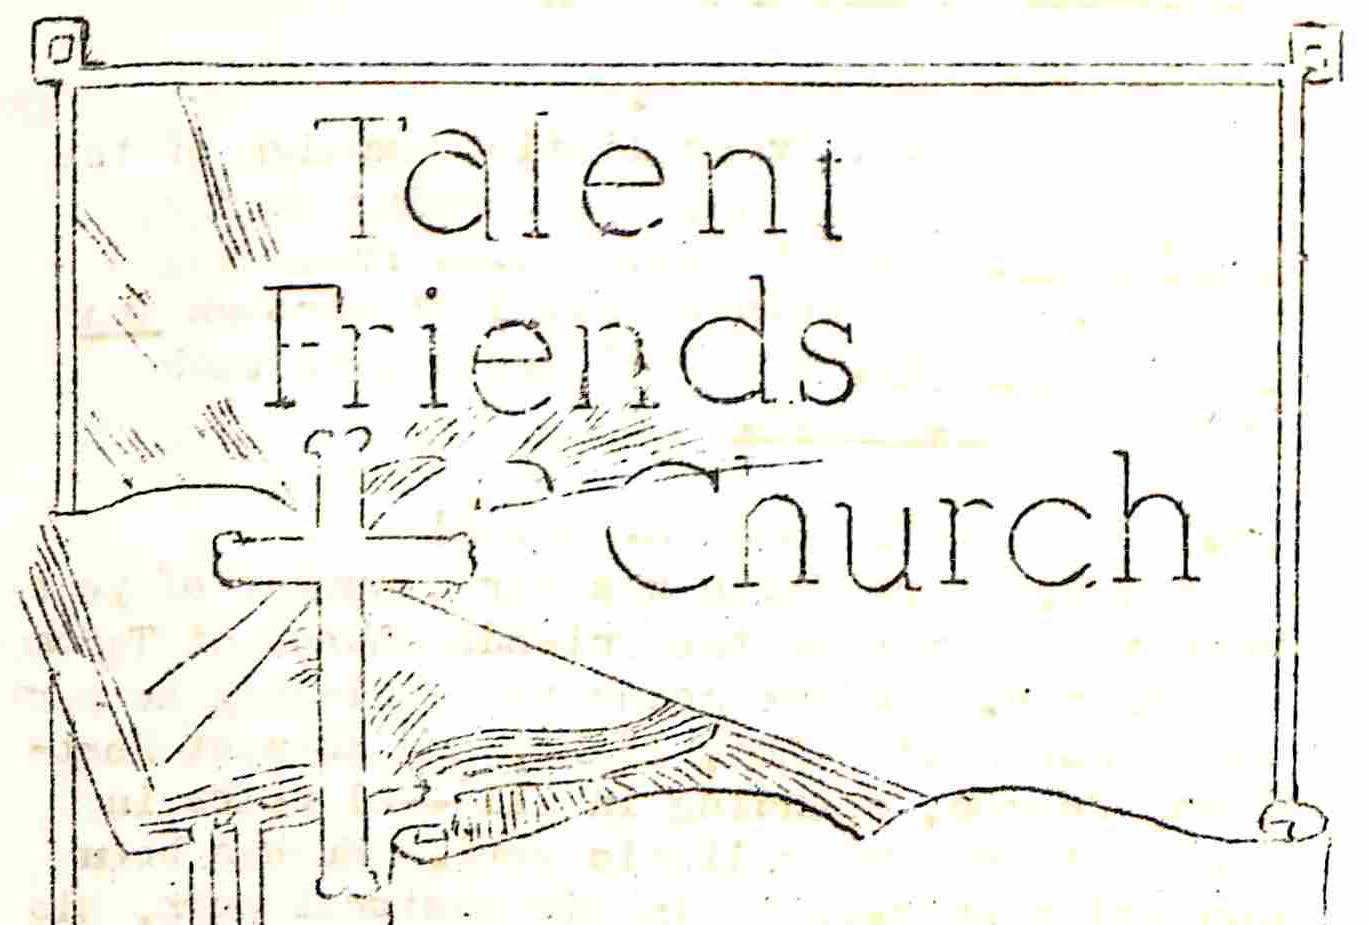 Talent Friends Church